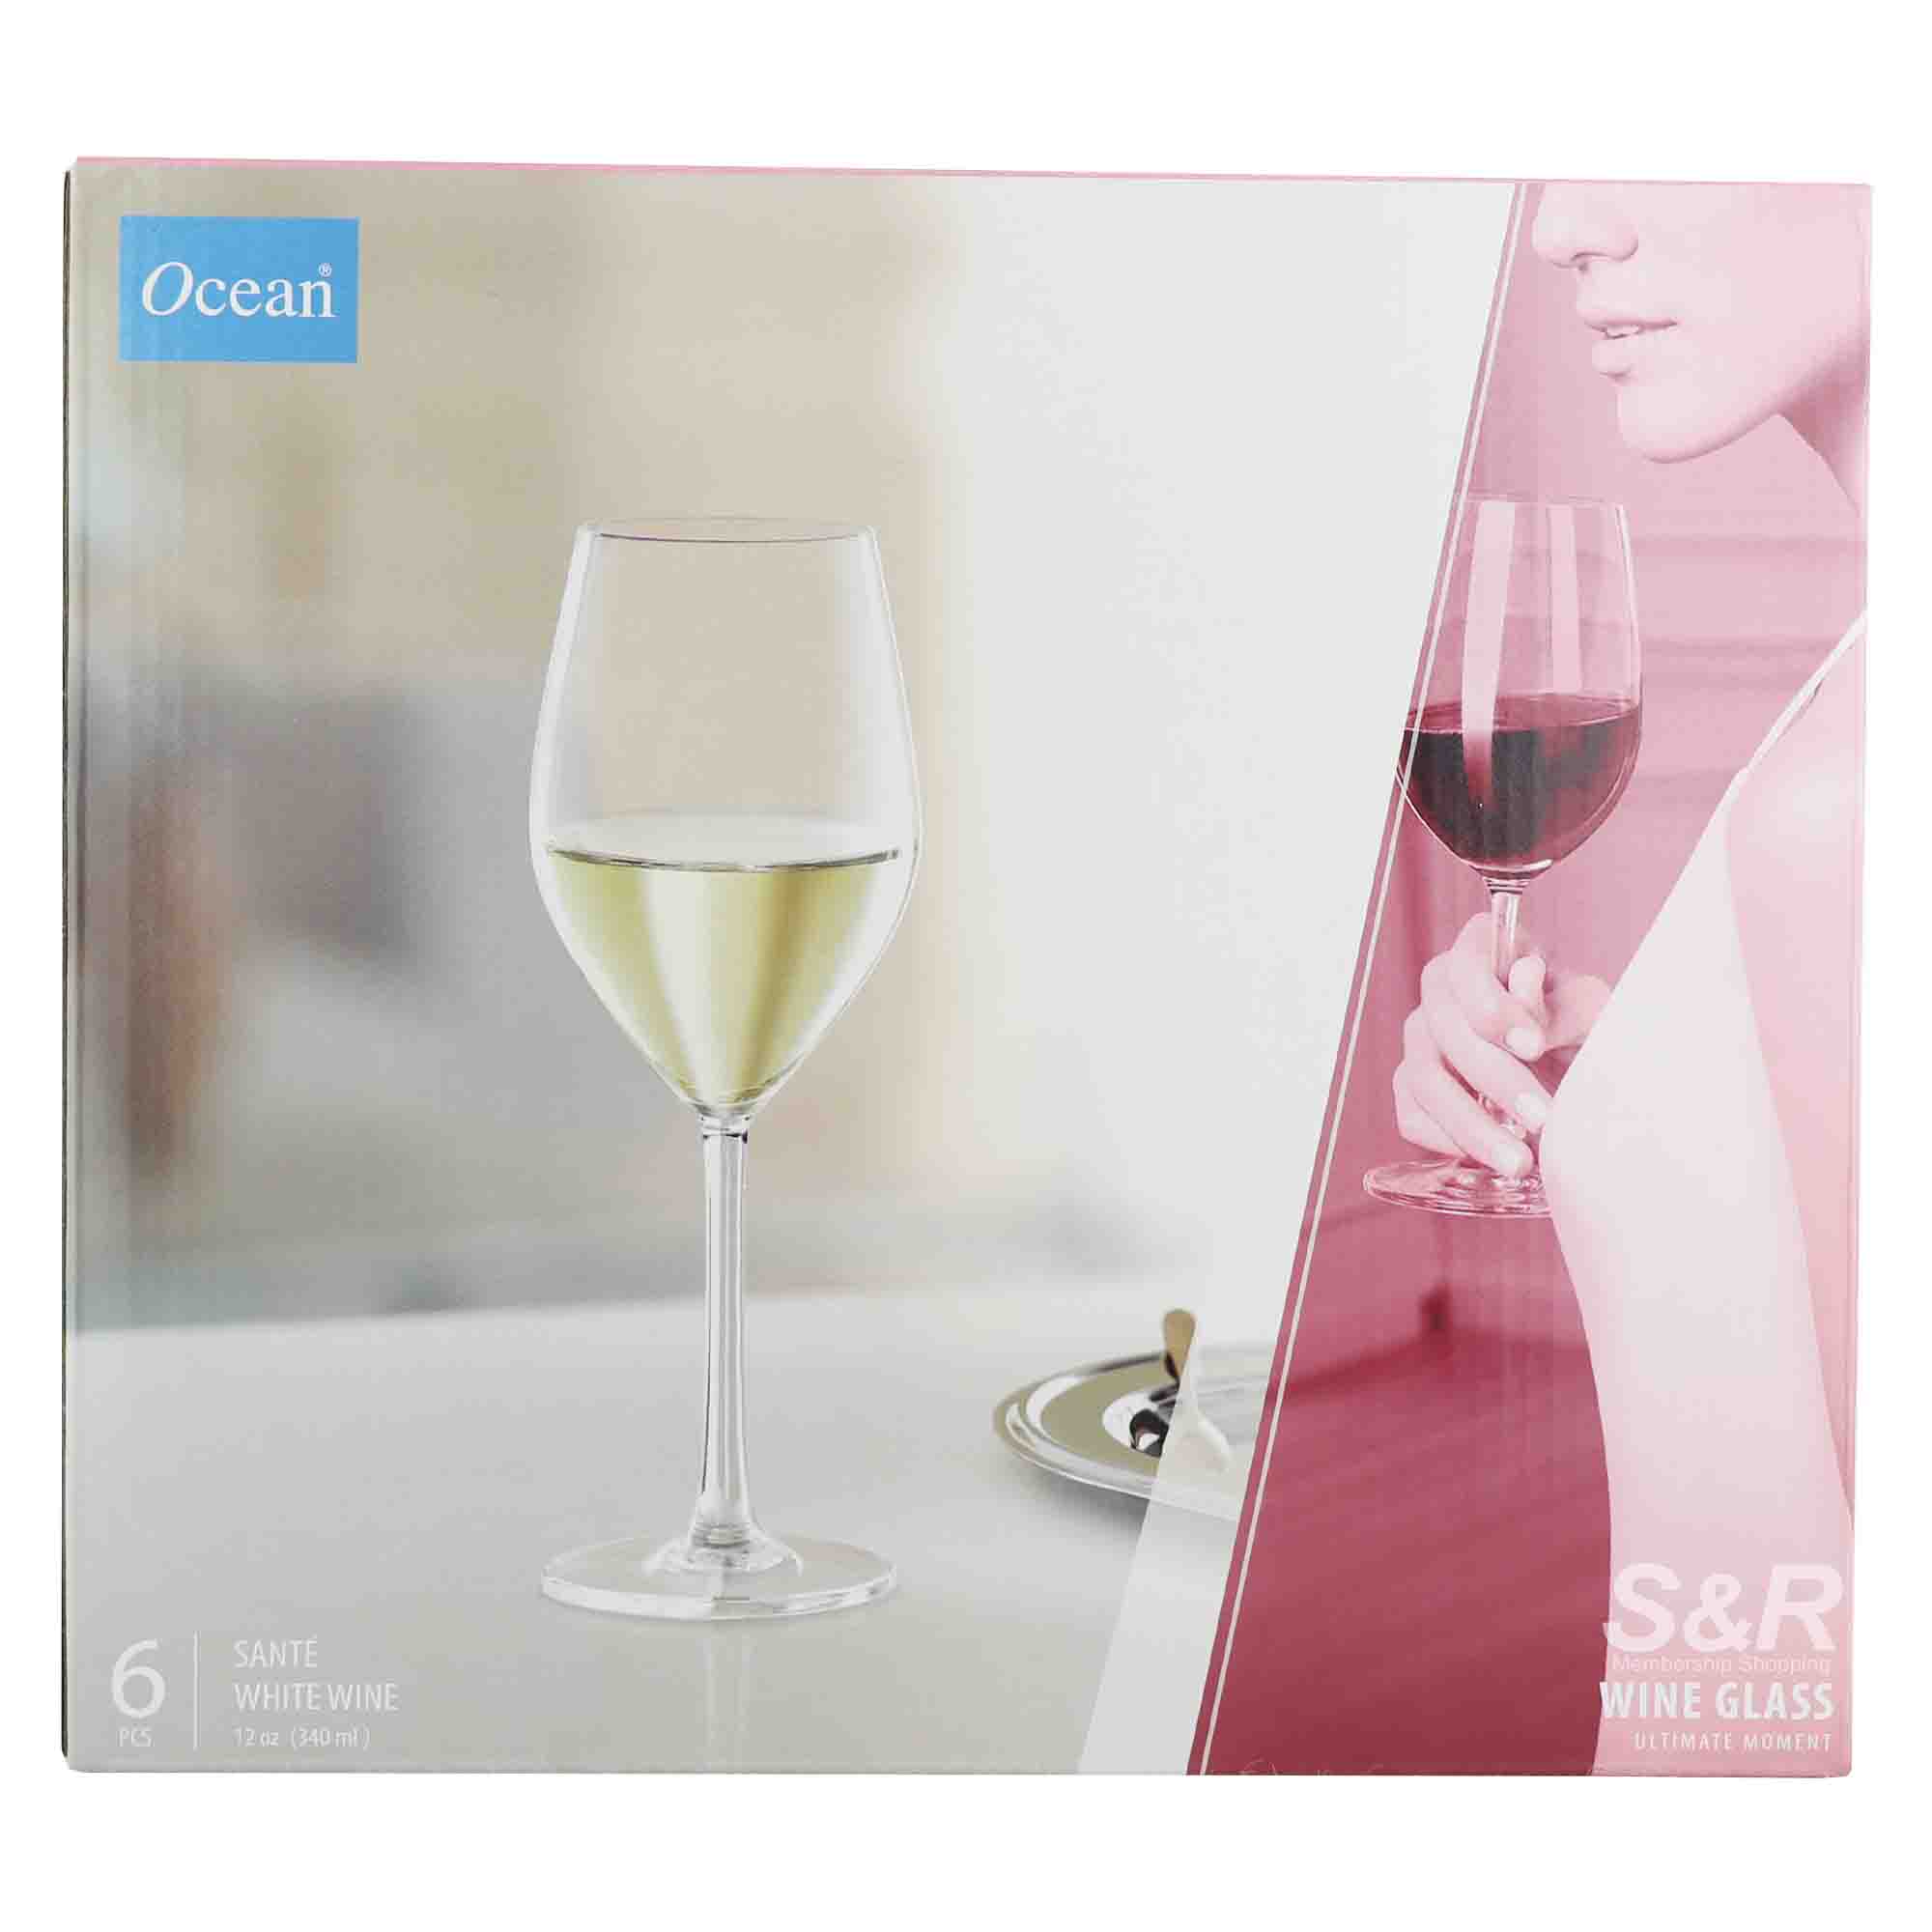 Ocean Sante White Wine Glass 6pcs